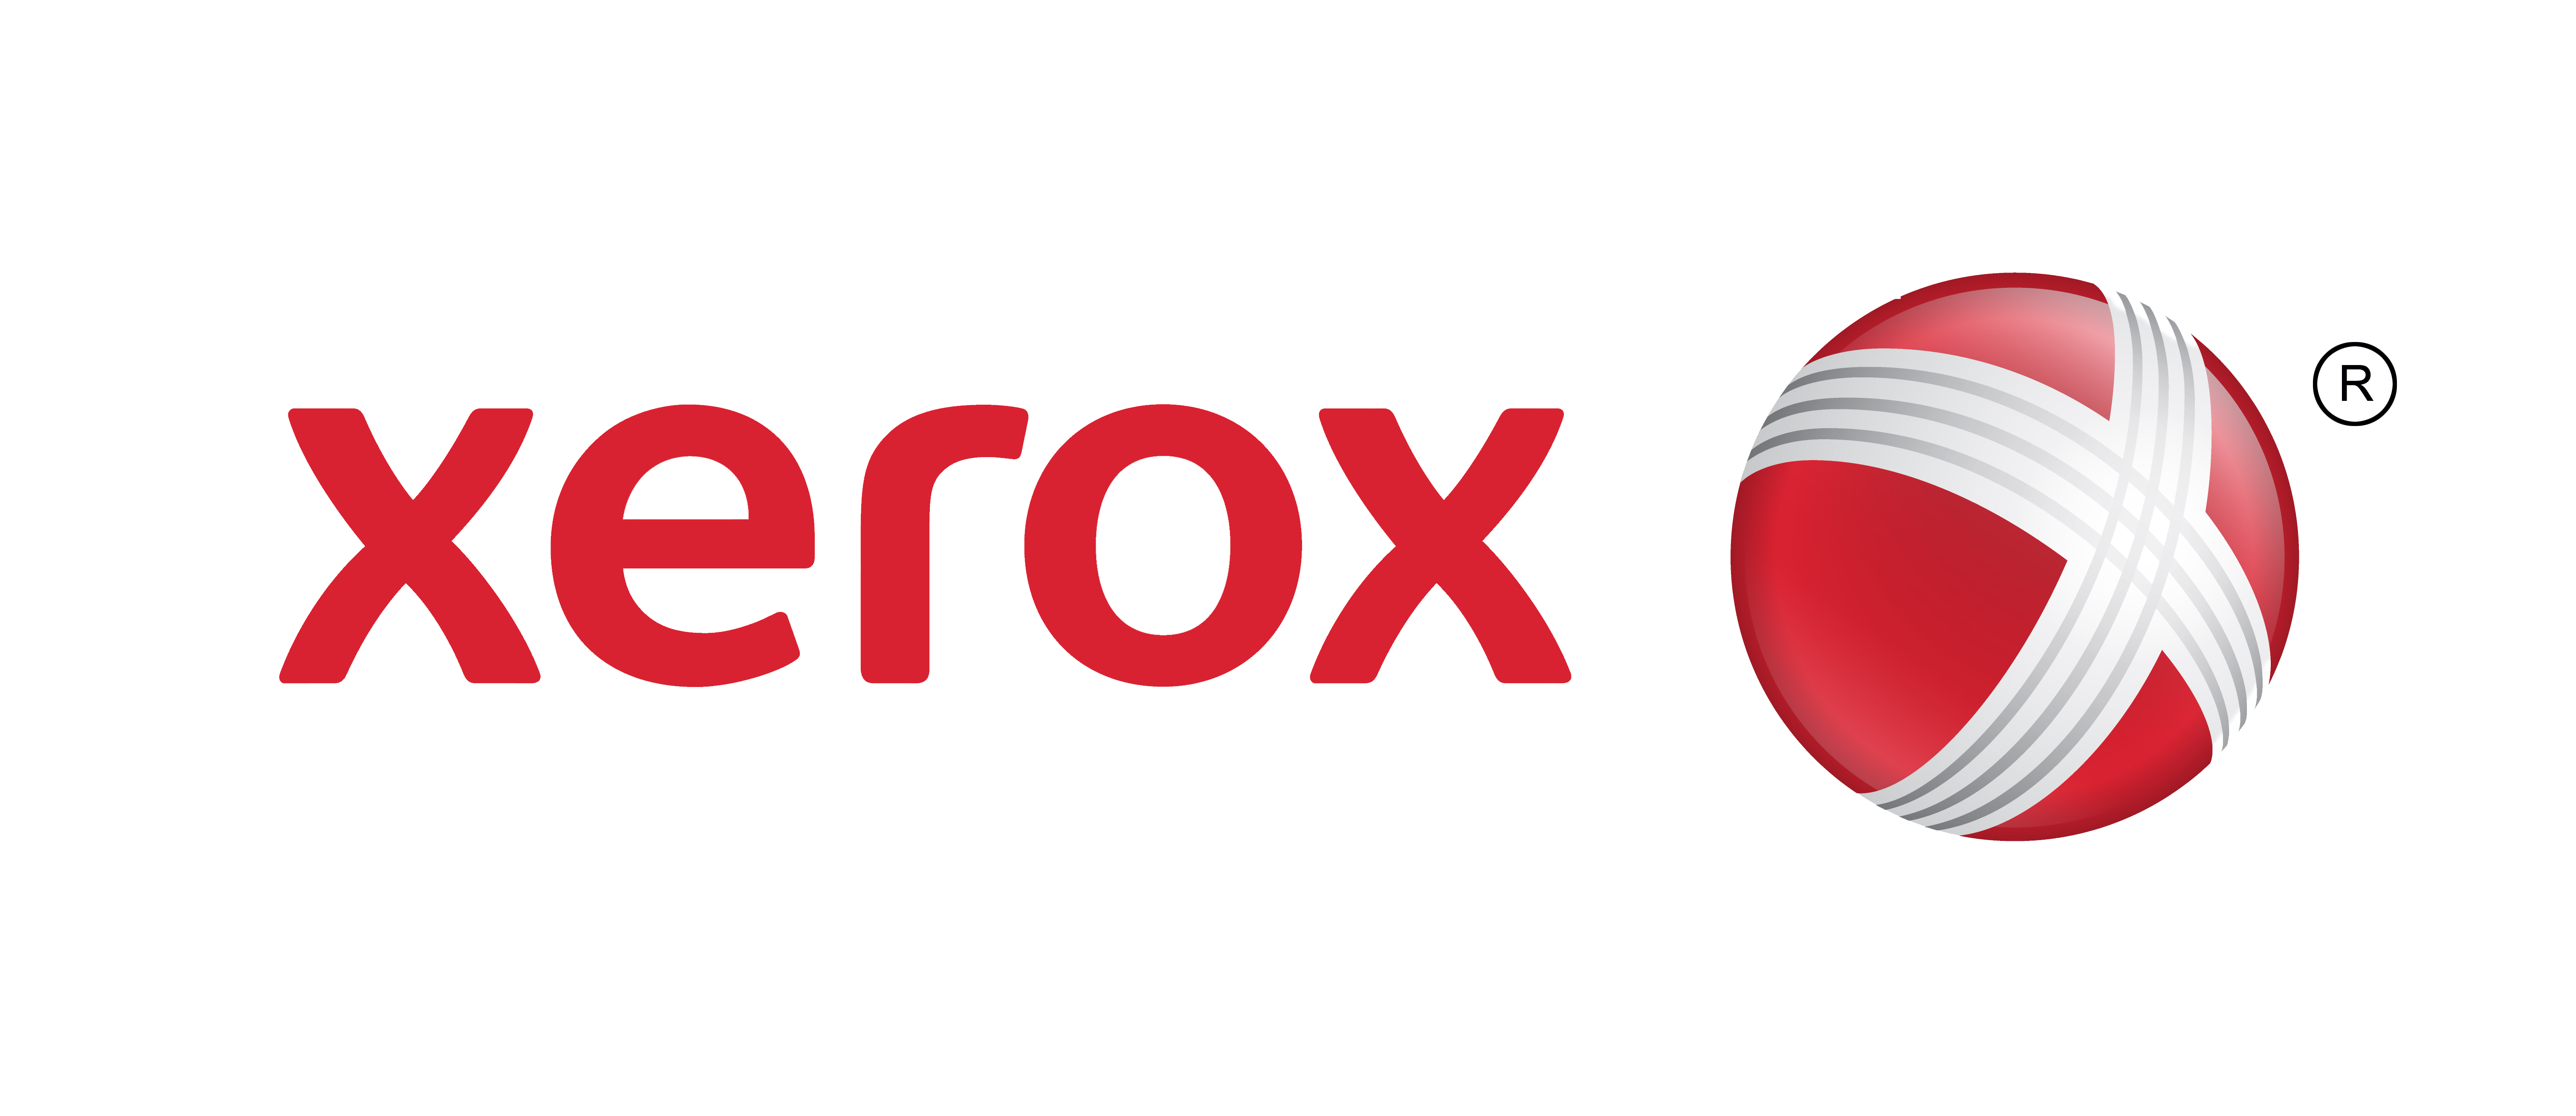 xerox-corporation-business-organization-logo-business-png-download